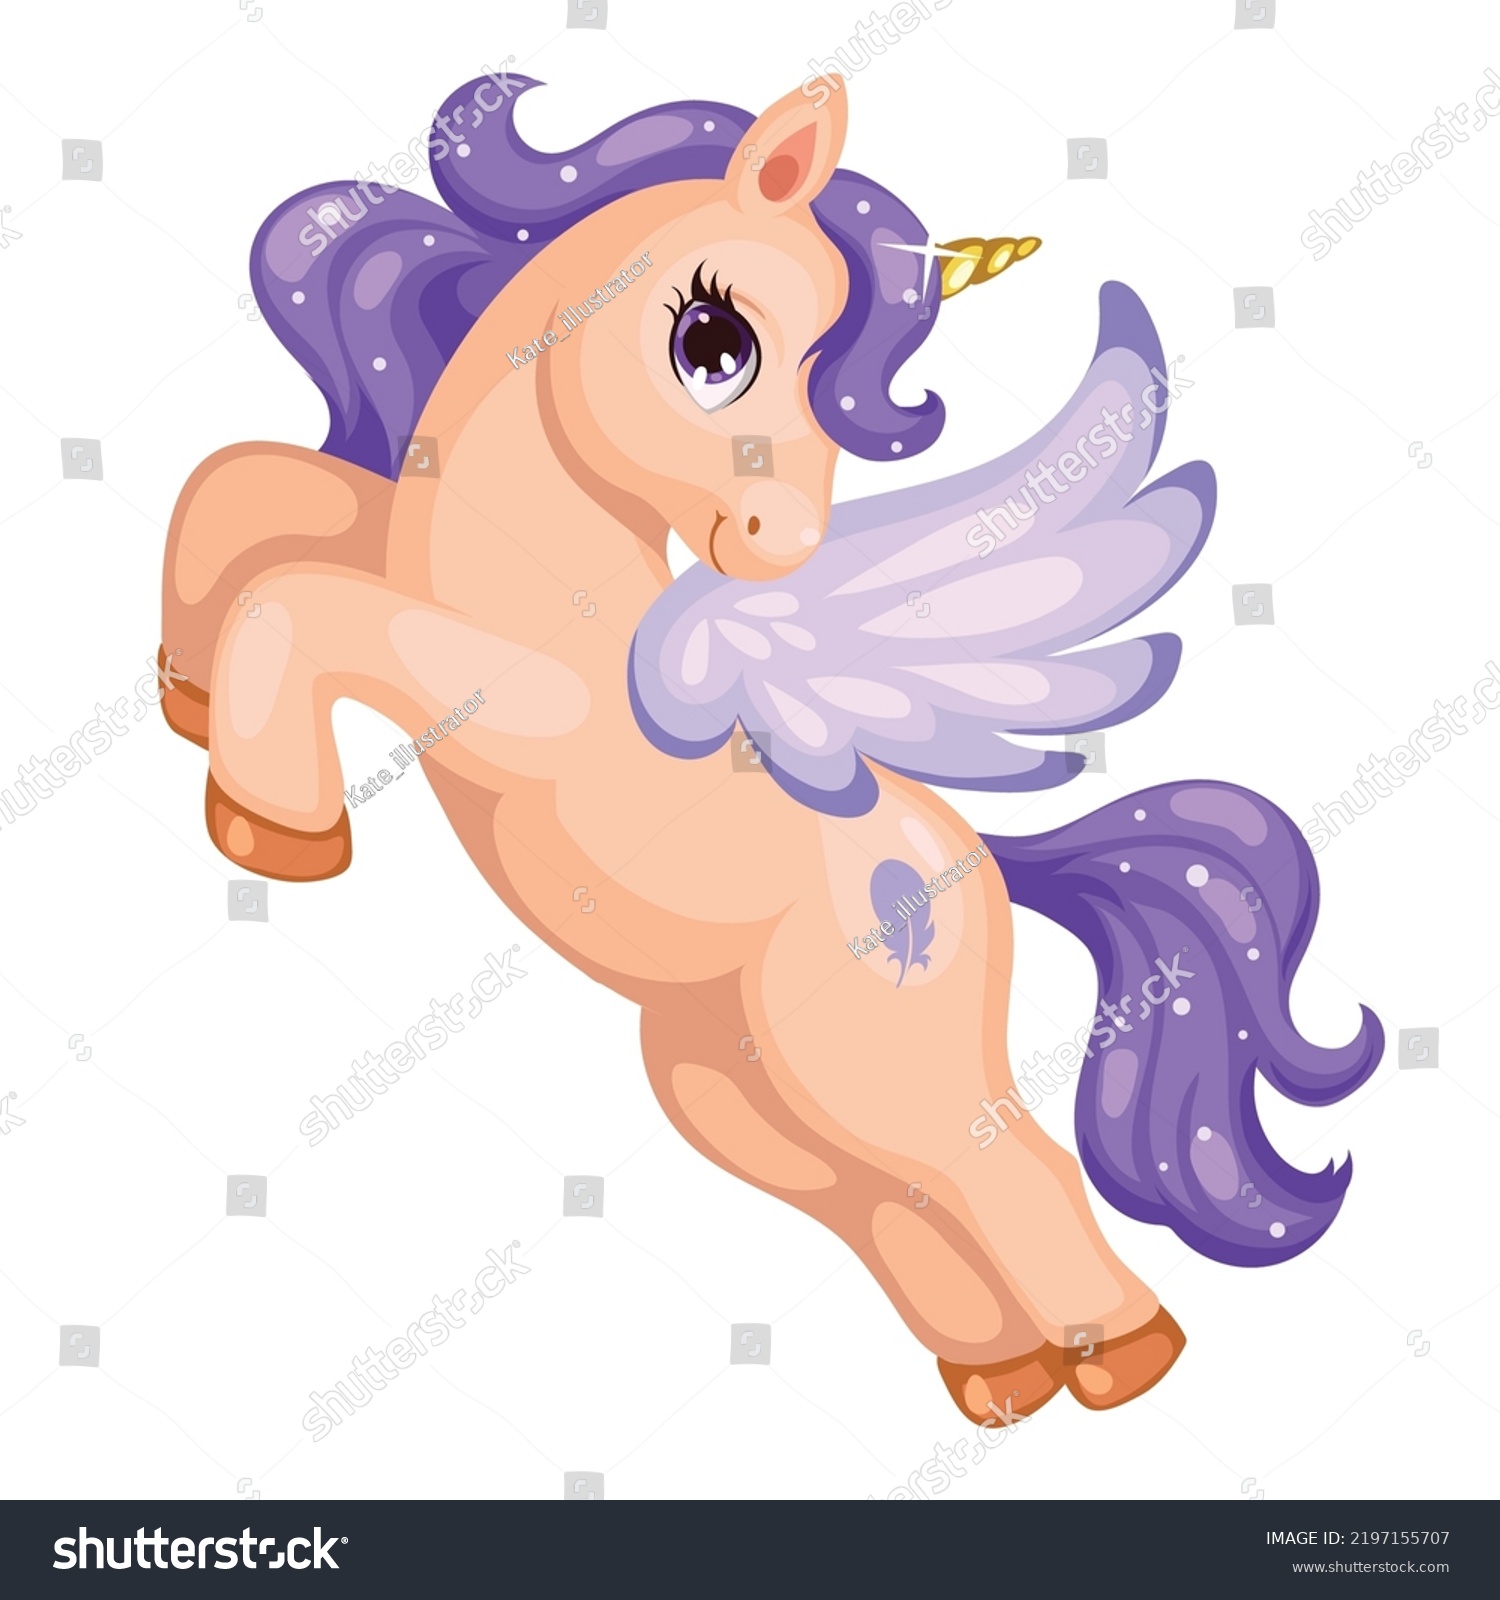 Cute Cartoon Illustration Unicorn Beautiful Flying Stock Vector Royalty Free 2197155707 3251